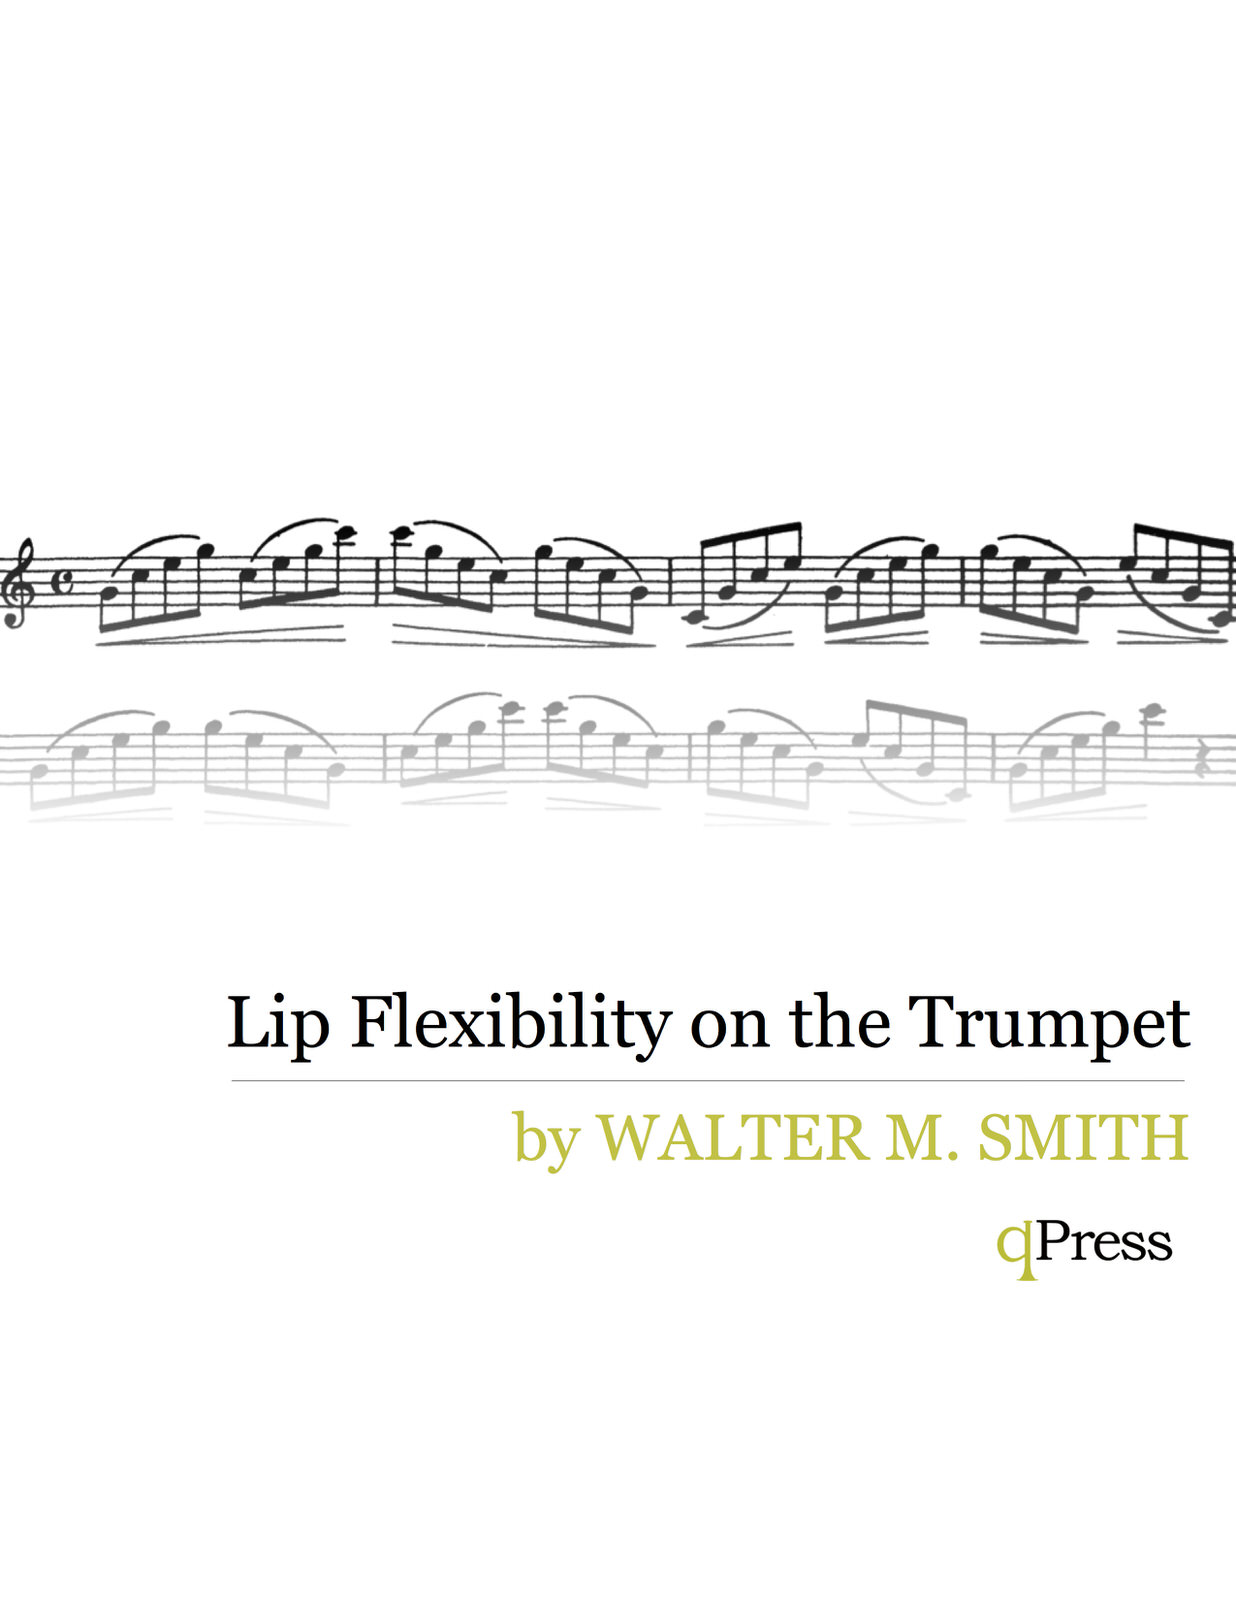 Advanced lip flexibilities for trumpet pdf